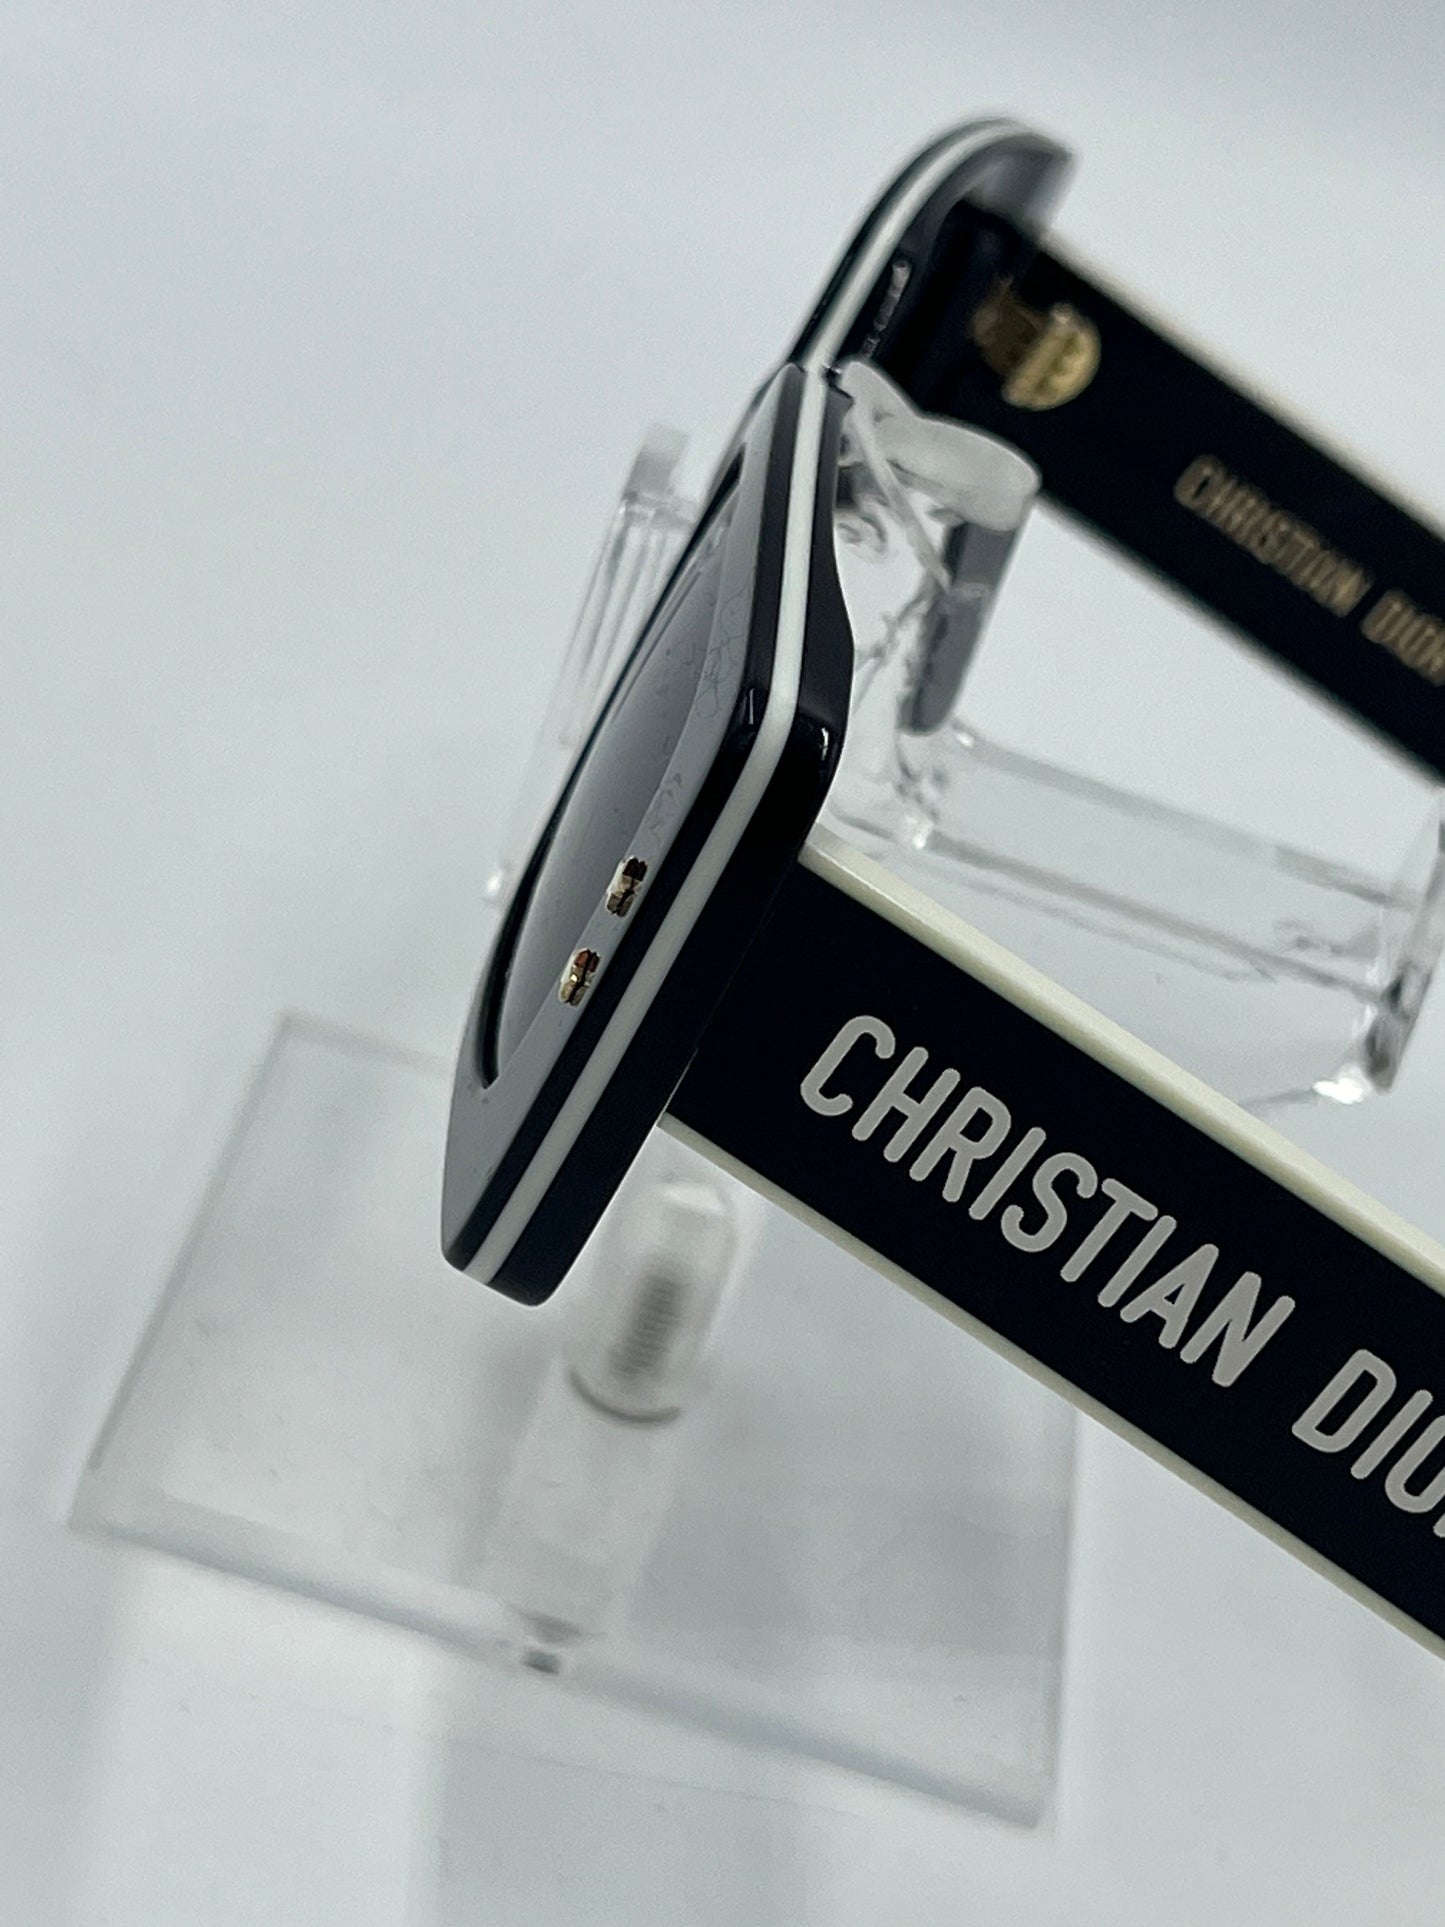 Christian Dior Wildior Sunglasses